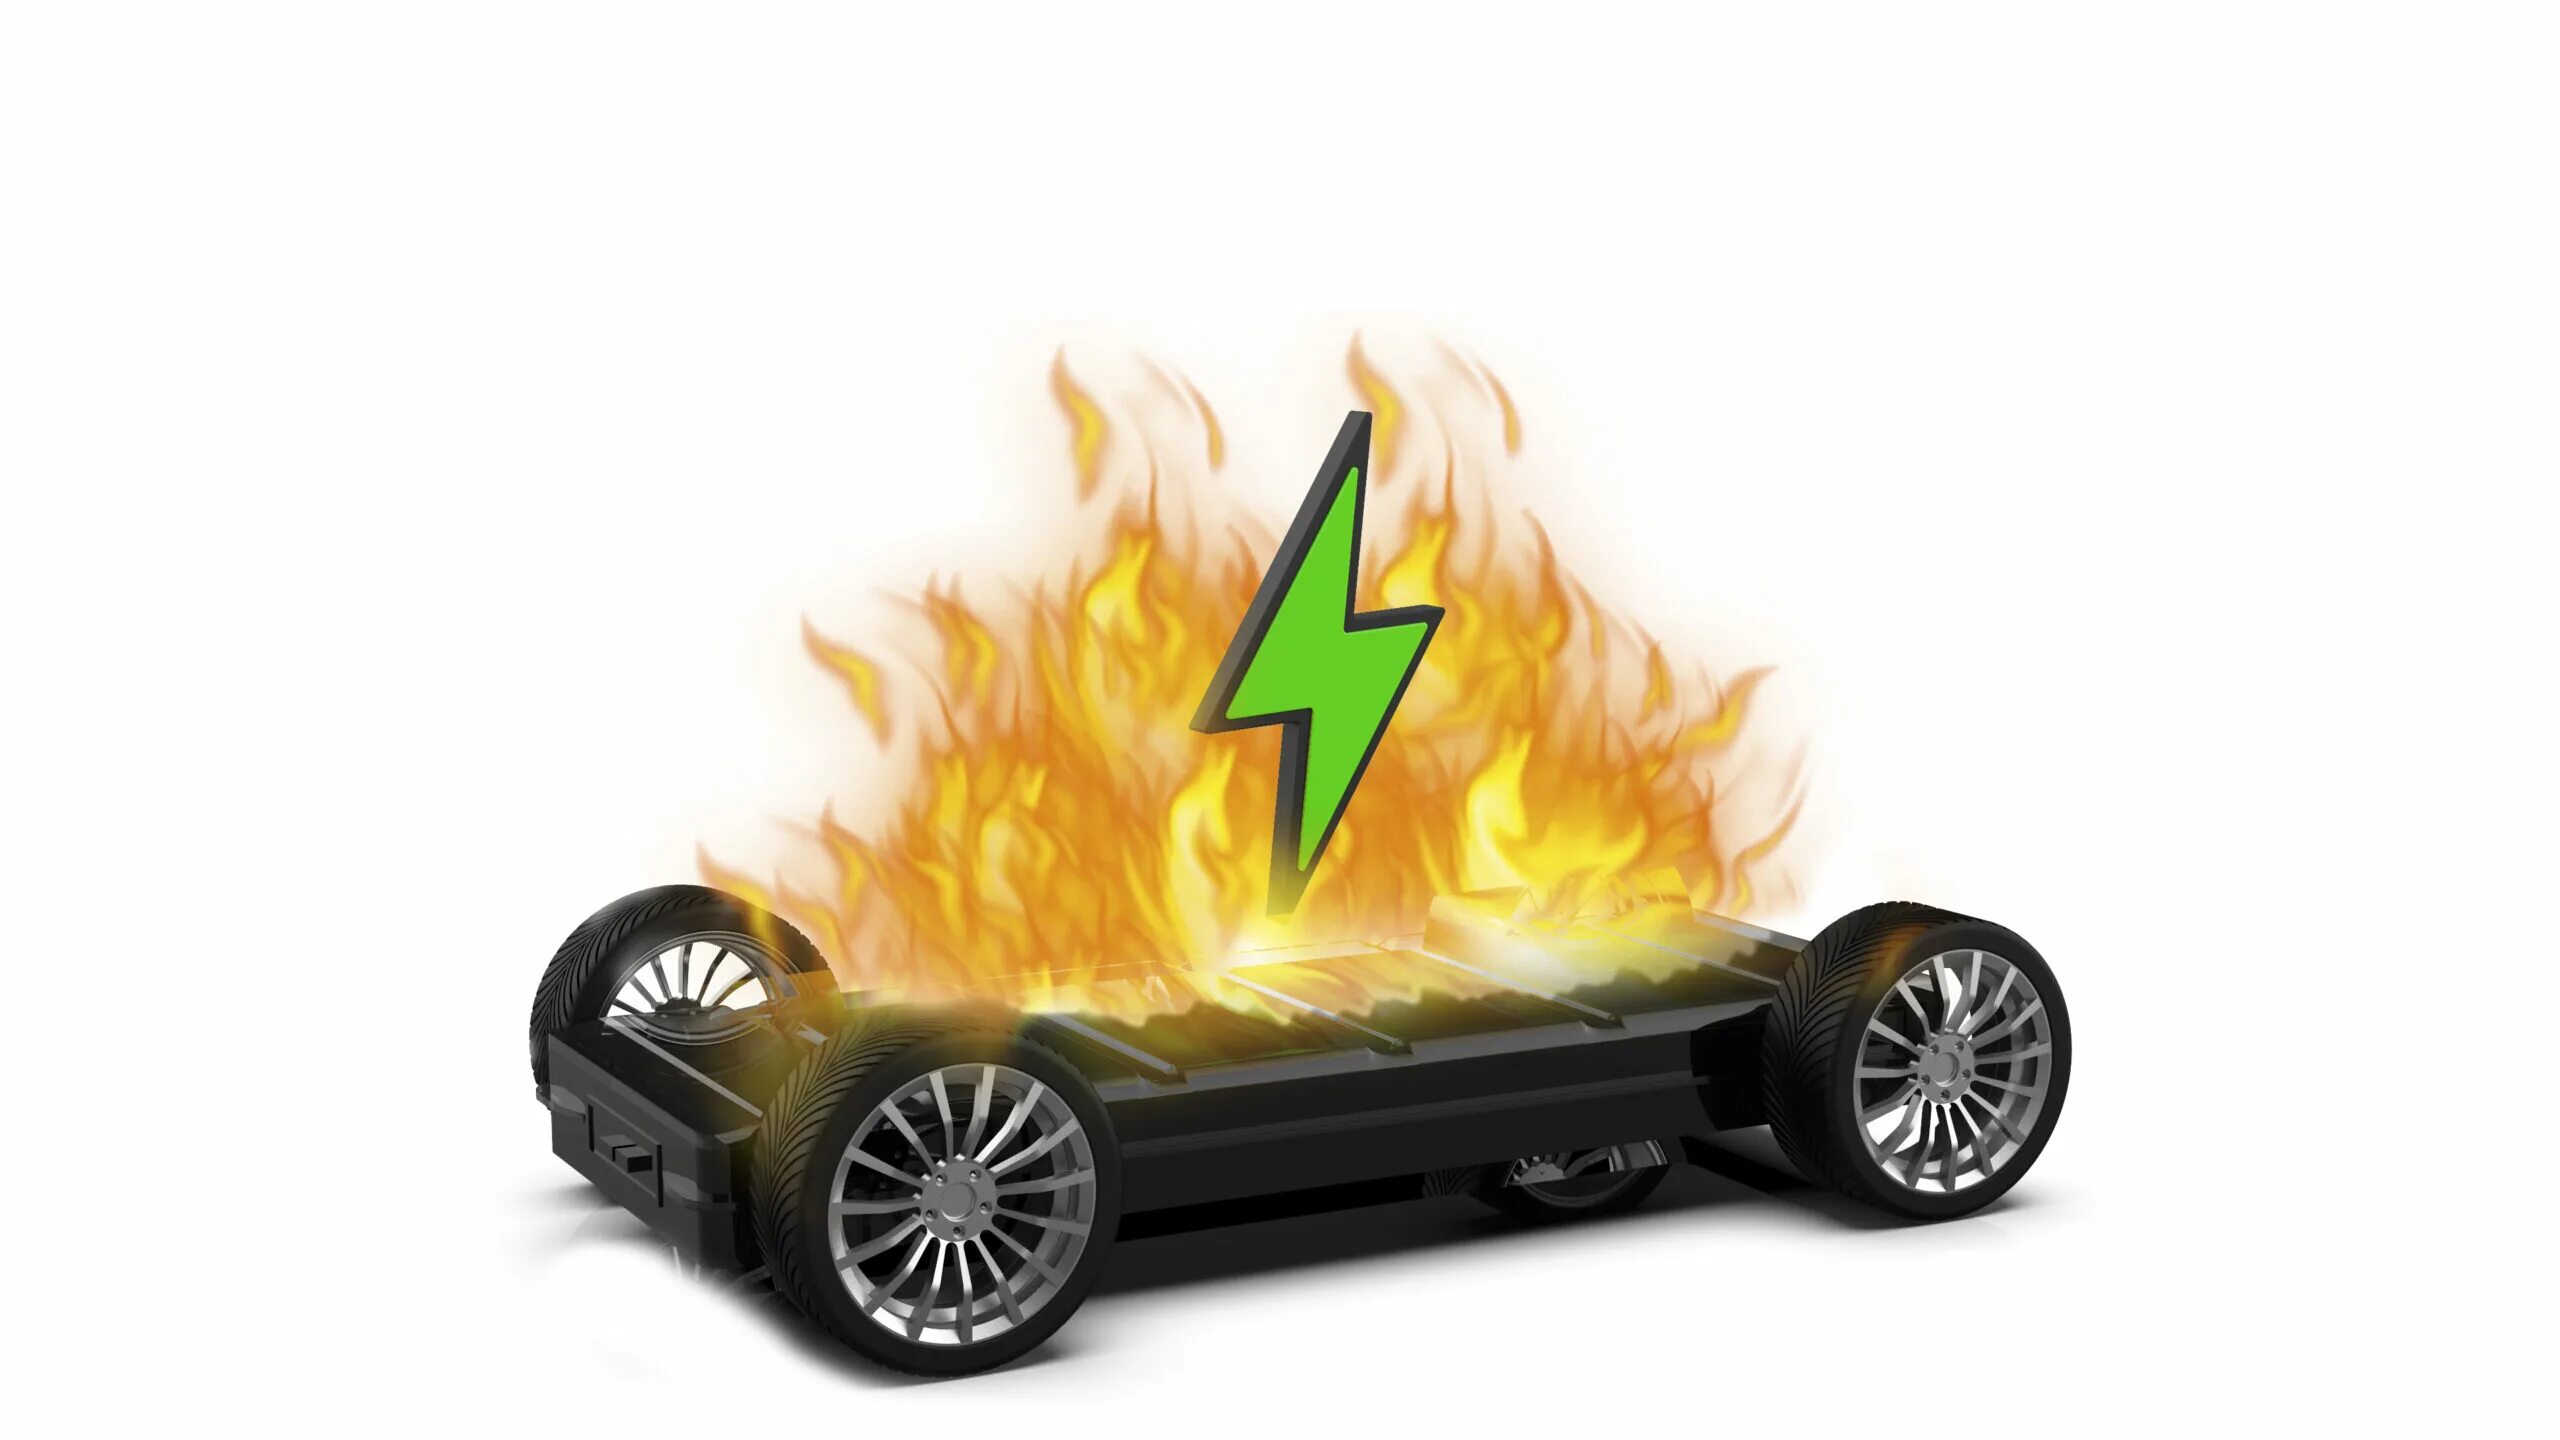 Fire battery. Огонь батарея. Огонь на батарейках. Lithium Battery Fire. Горящий автомобильный аккумулятор.